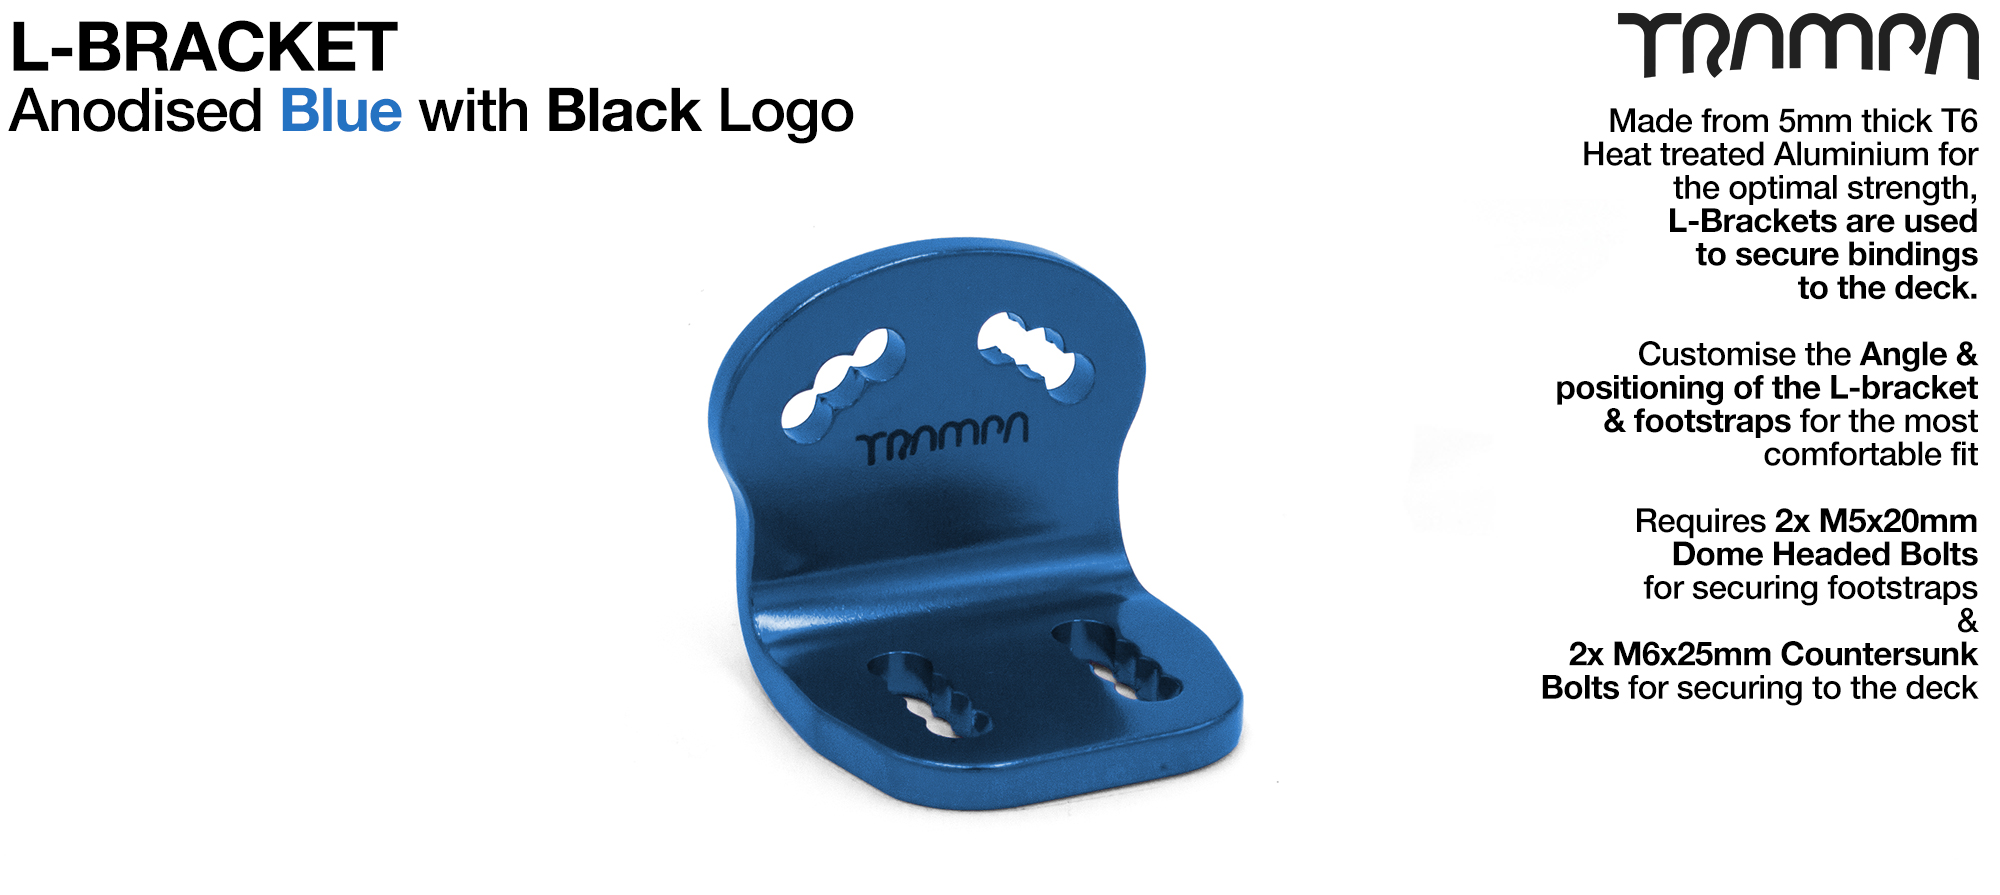 L Bracket - Anodised BLUE with BLACK logo x4